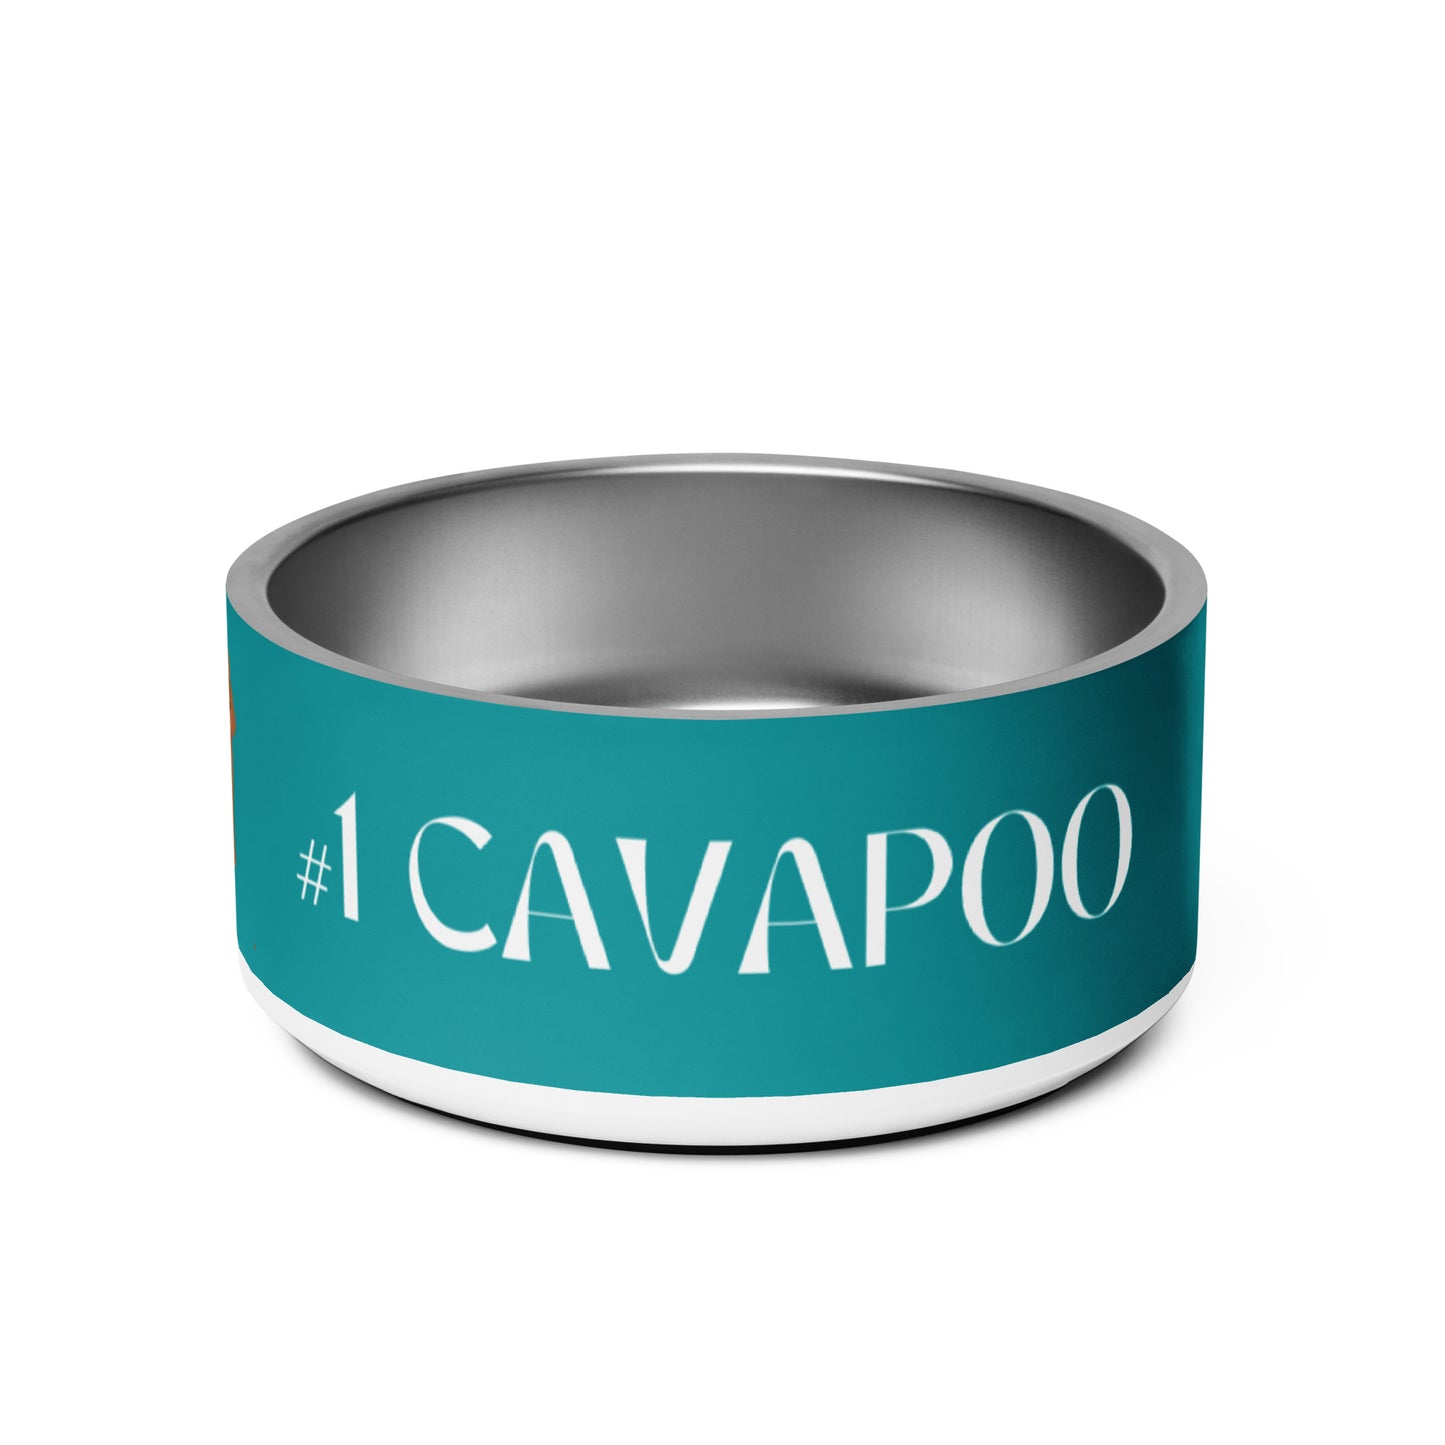 "Number 1 Cavapoo" Pet bowl